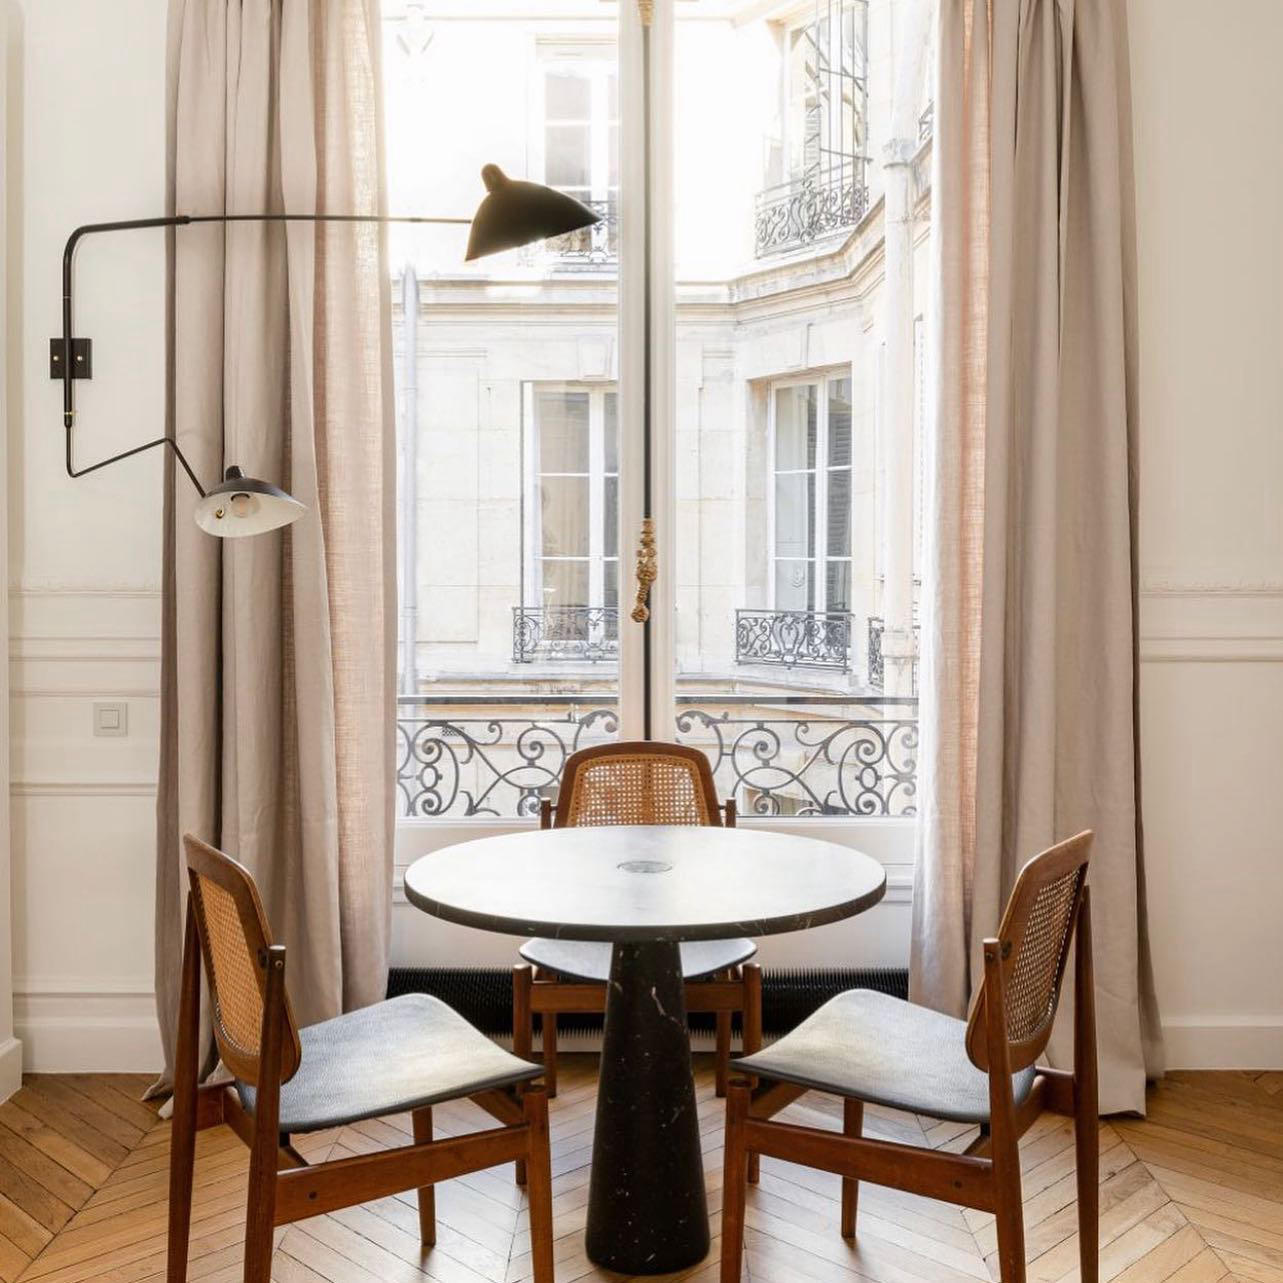 image  1 Parisian Interior Inspiration - The warm colors